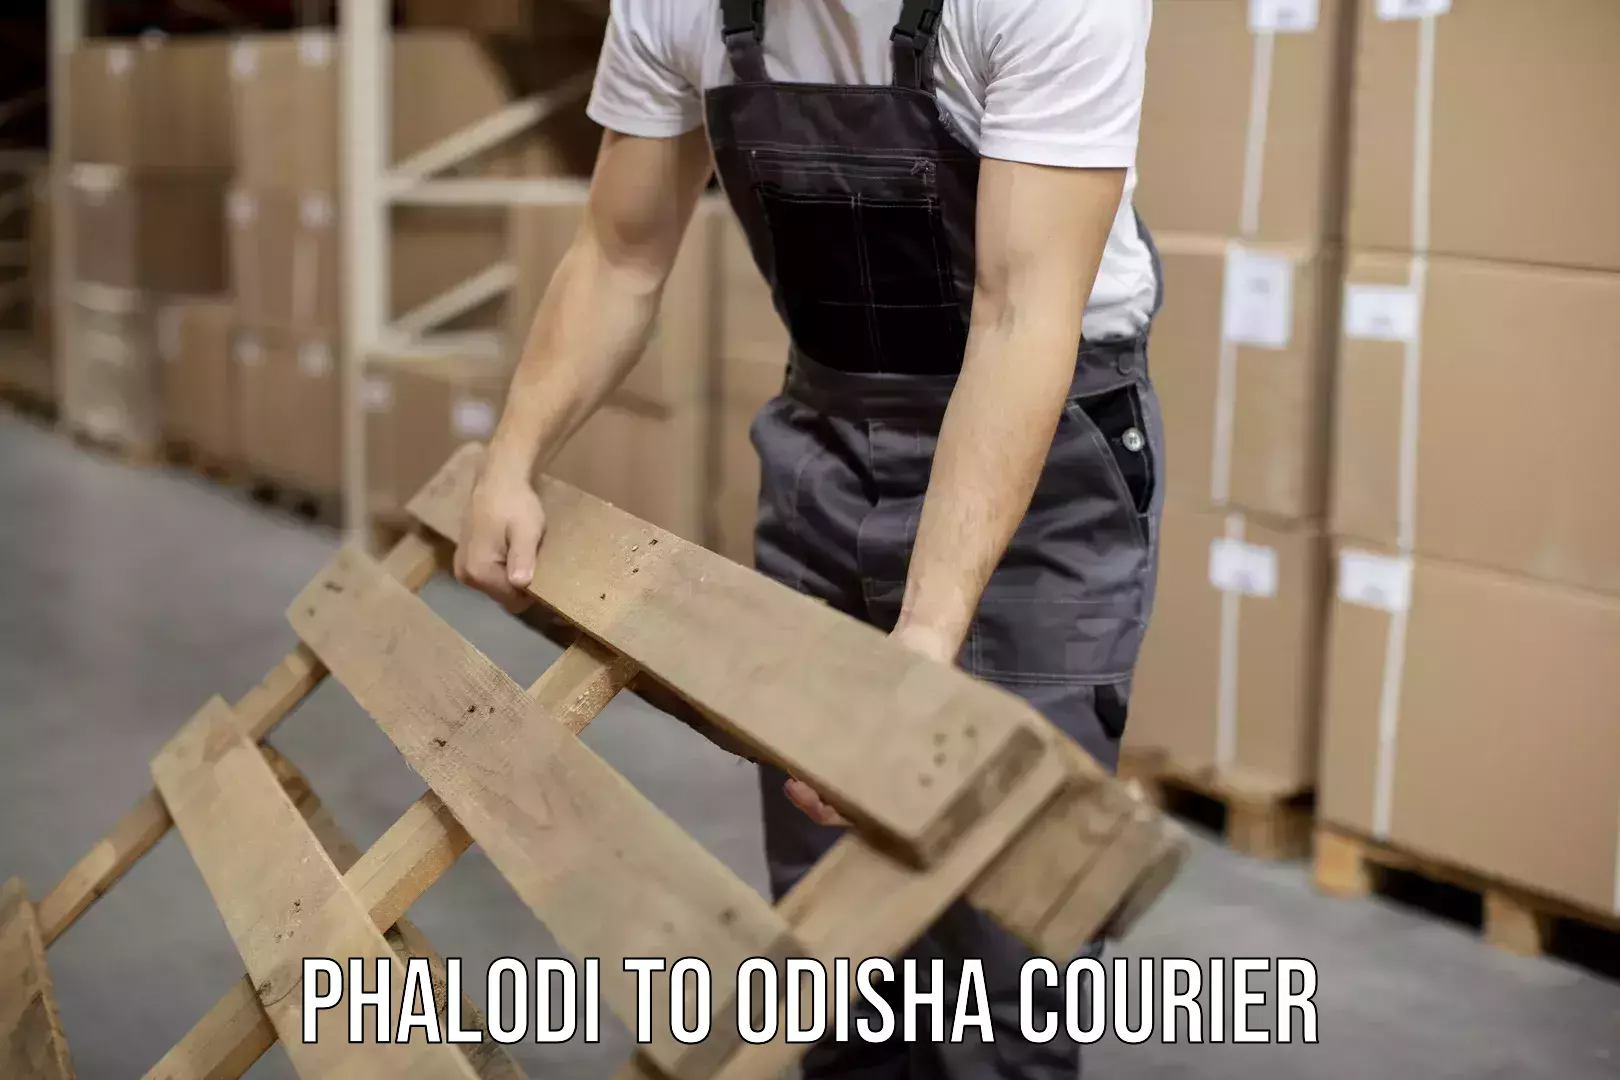 Professional courier handling Phalodi to Odisha